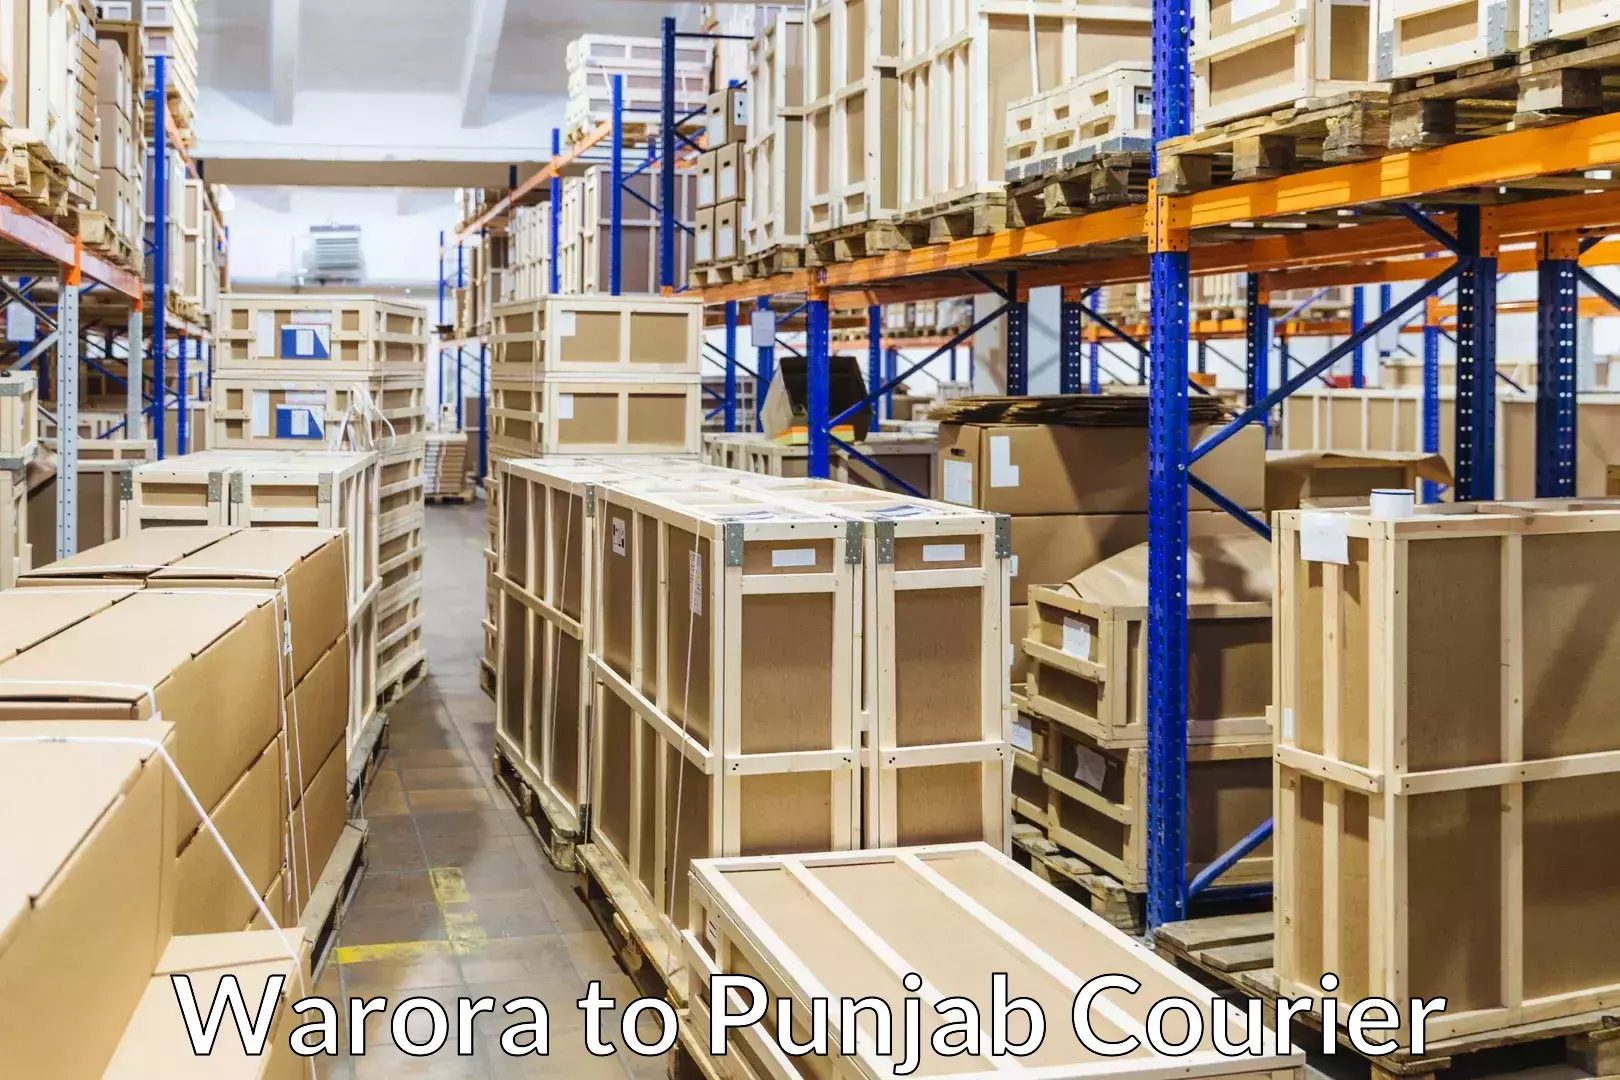 Moving and handling services Warora to Punjab